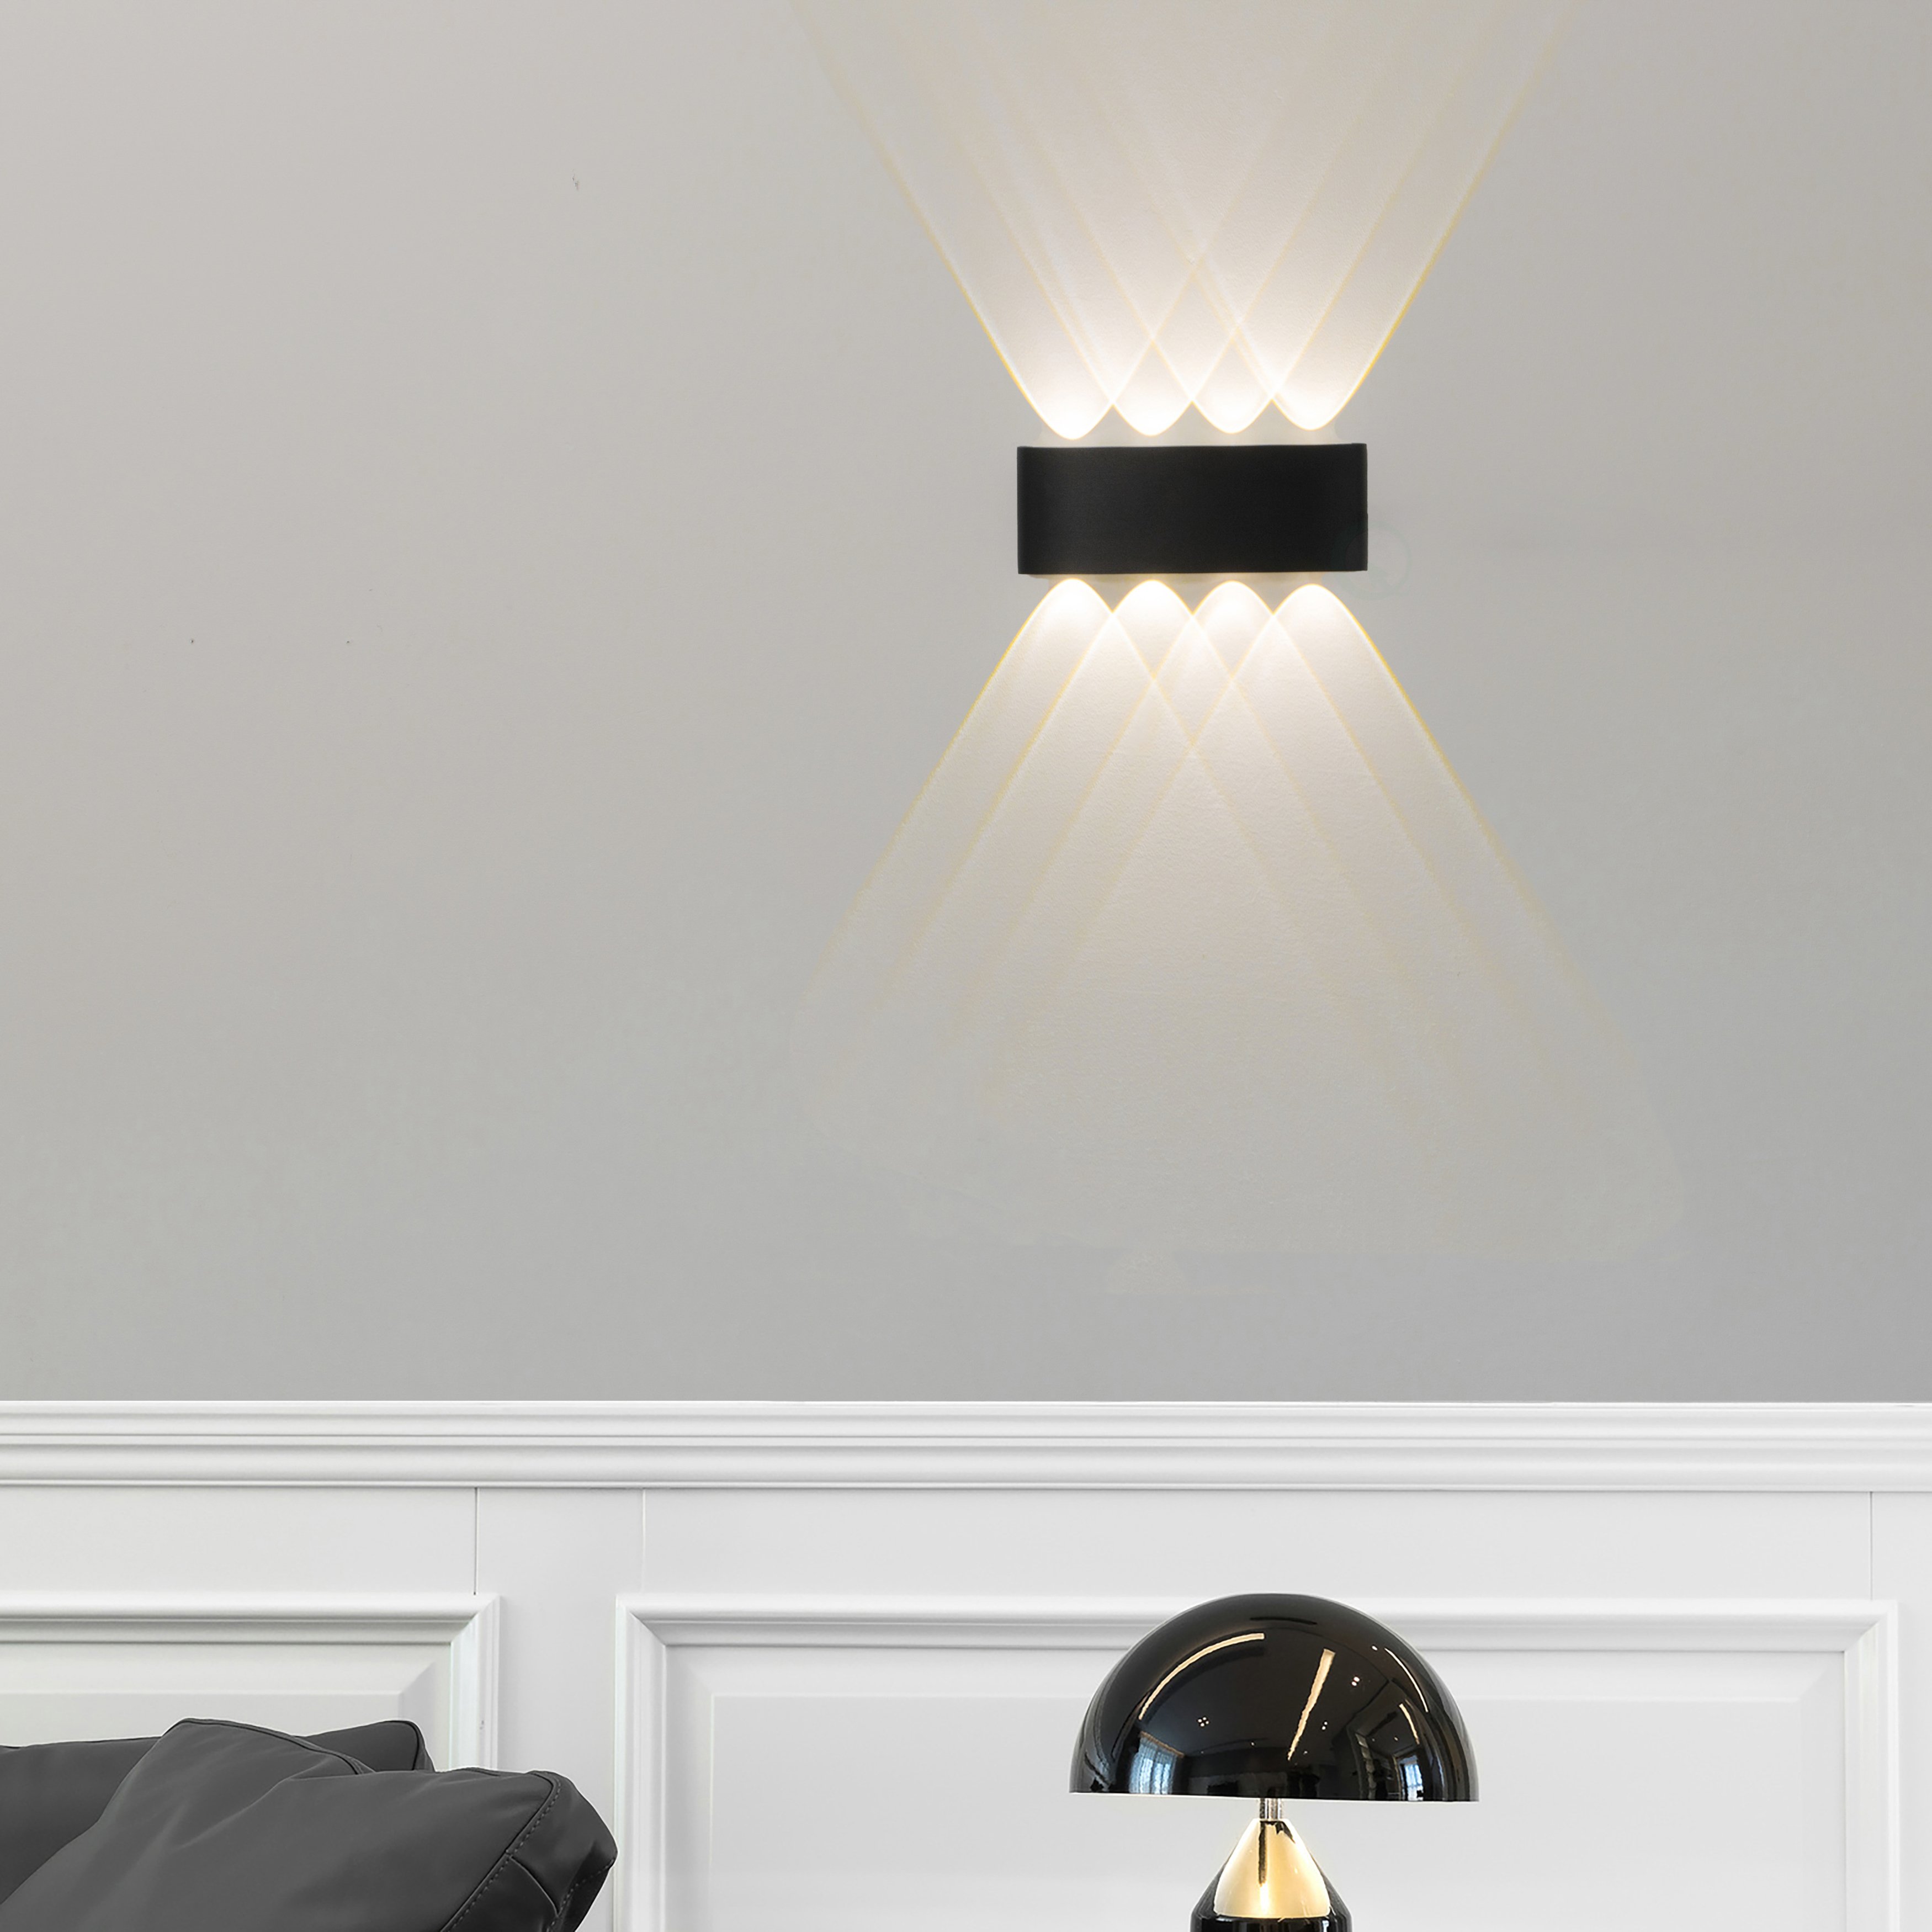 Black Contemporary Decorative Waterproof Aluminum Wall Lamp For Indoors And Outdoors, 8 Watt Cool White 4000K - Black 6Watt Set Of 2